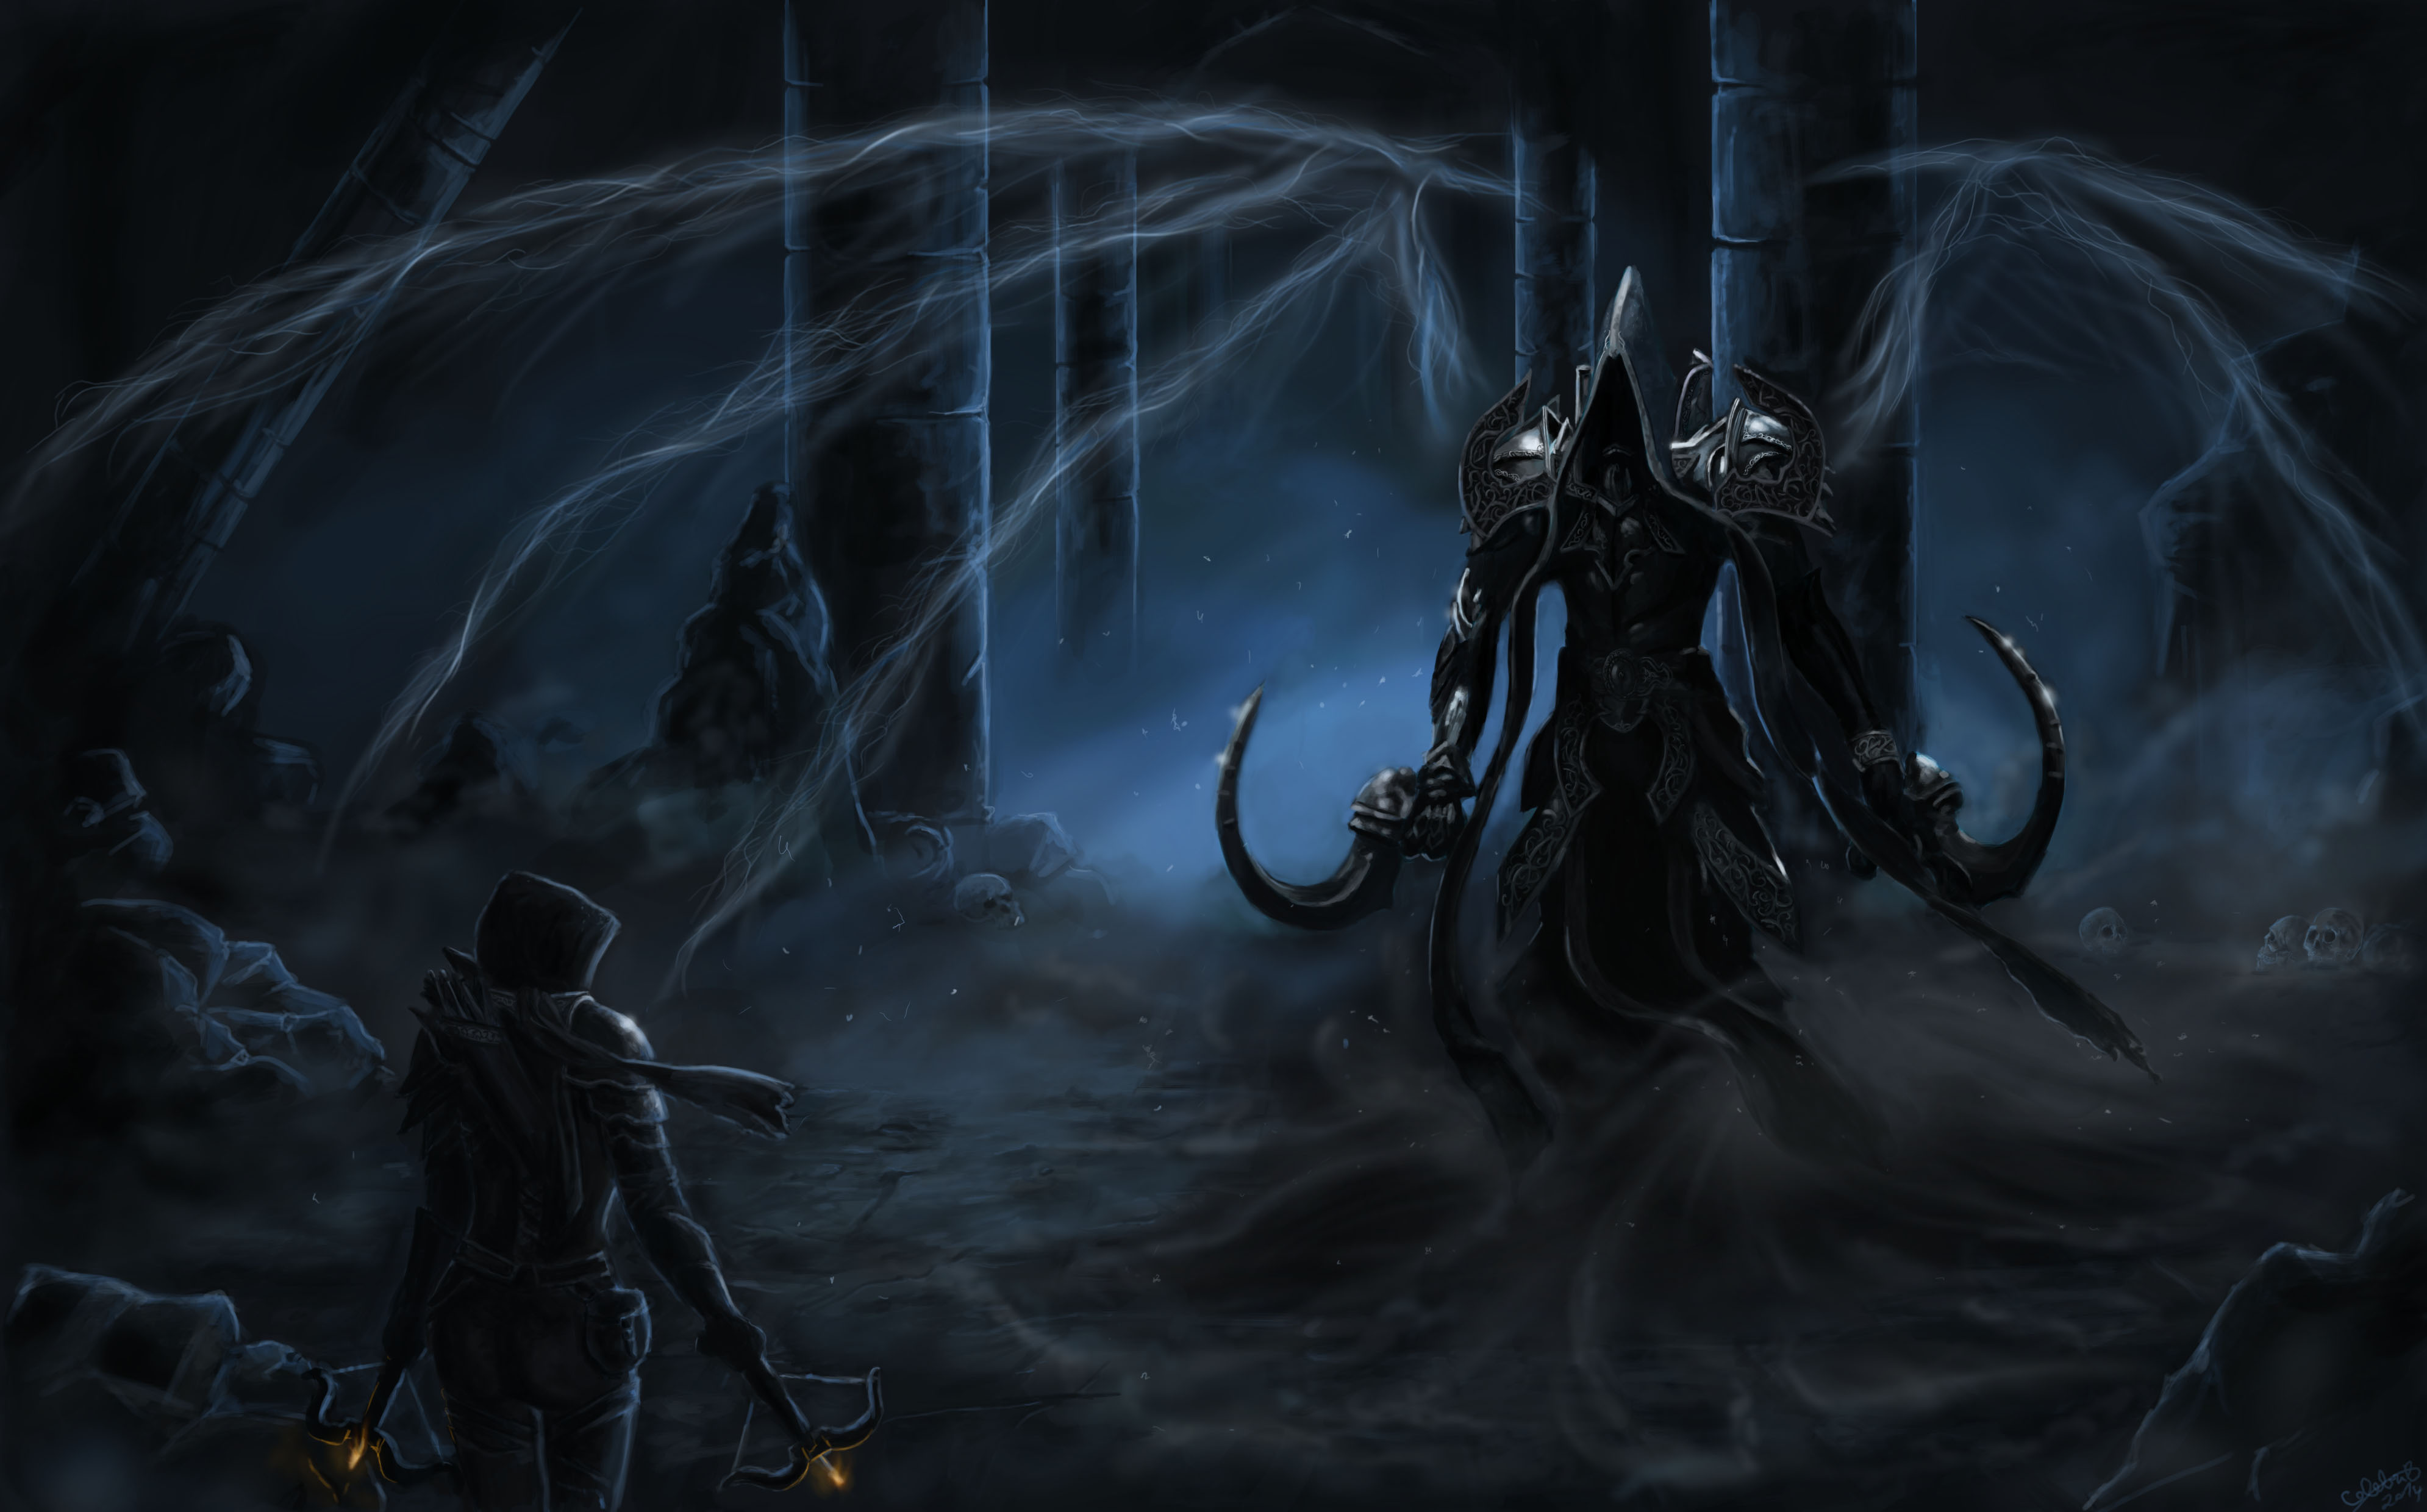 Baixe gratuitamente a imagem Diablo, Videogame, Caçador De Demônios (Diablo Iii), Maltael (Diablo Iii), Diablo Iii: Reaper Of Souls na área de trabalho do seu PC